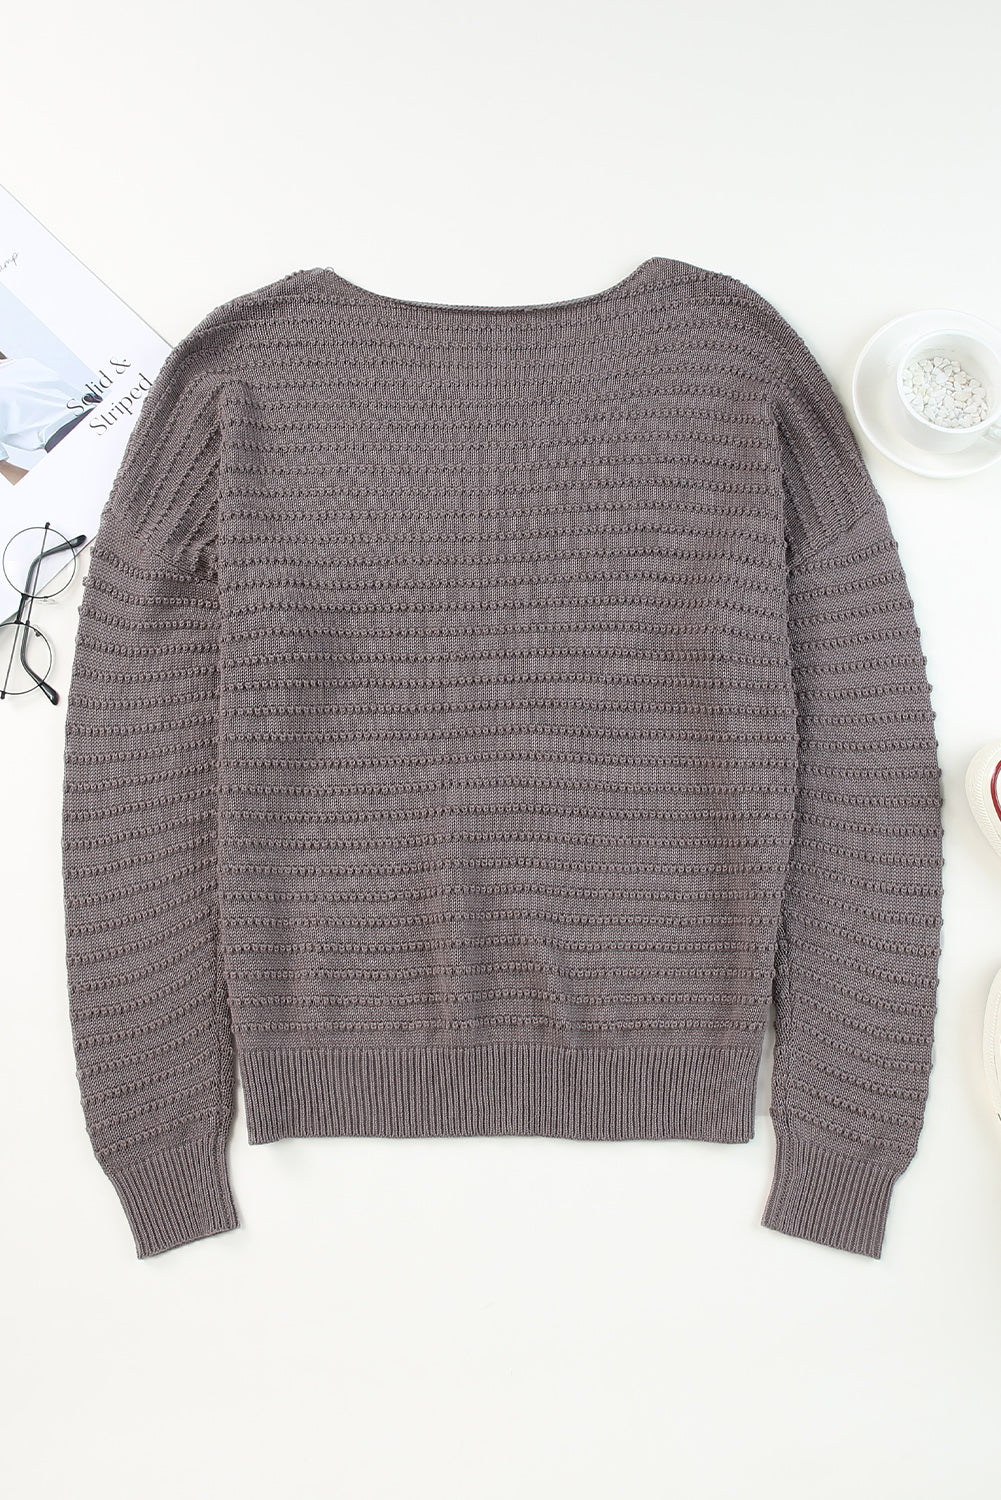 Textured Knit Round Neck Dolman Sleeve Sweater